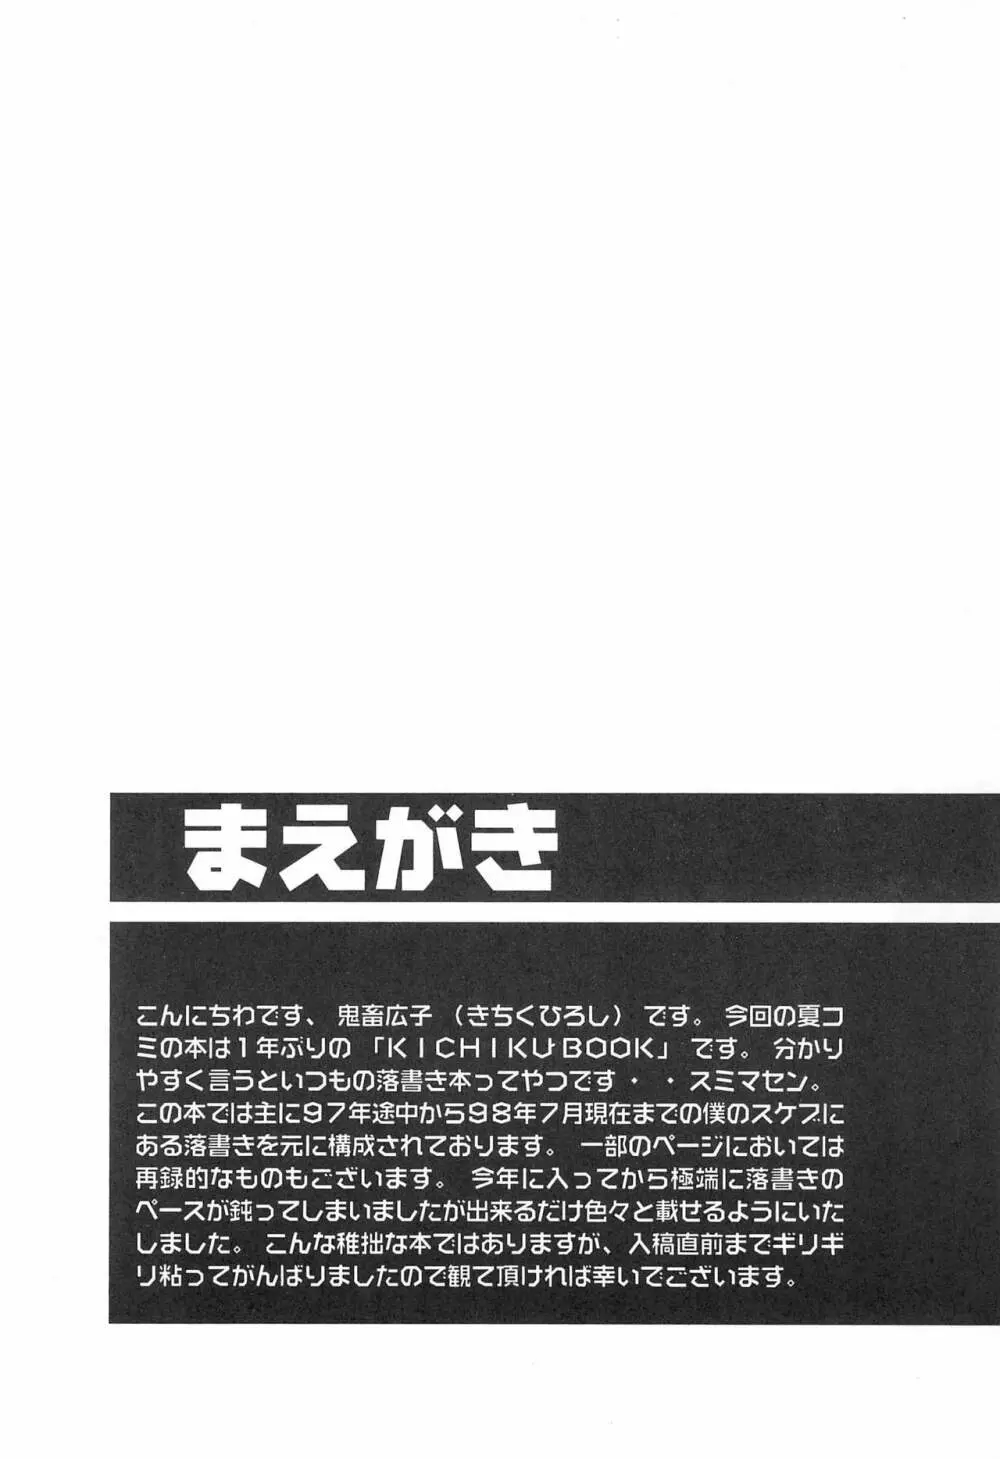 KICHIKU BOOK 5X - page4